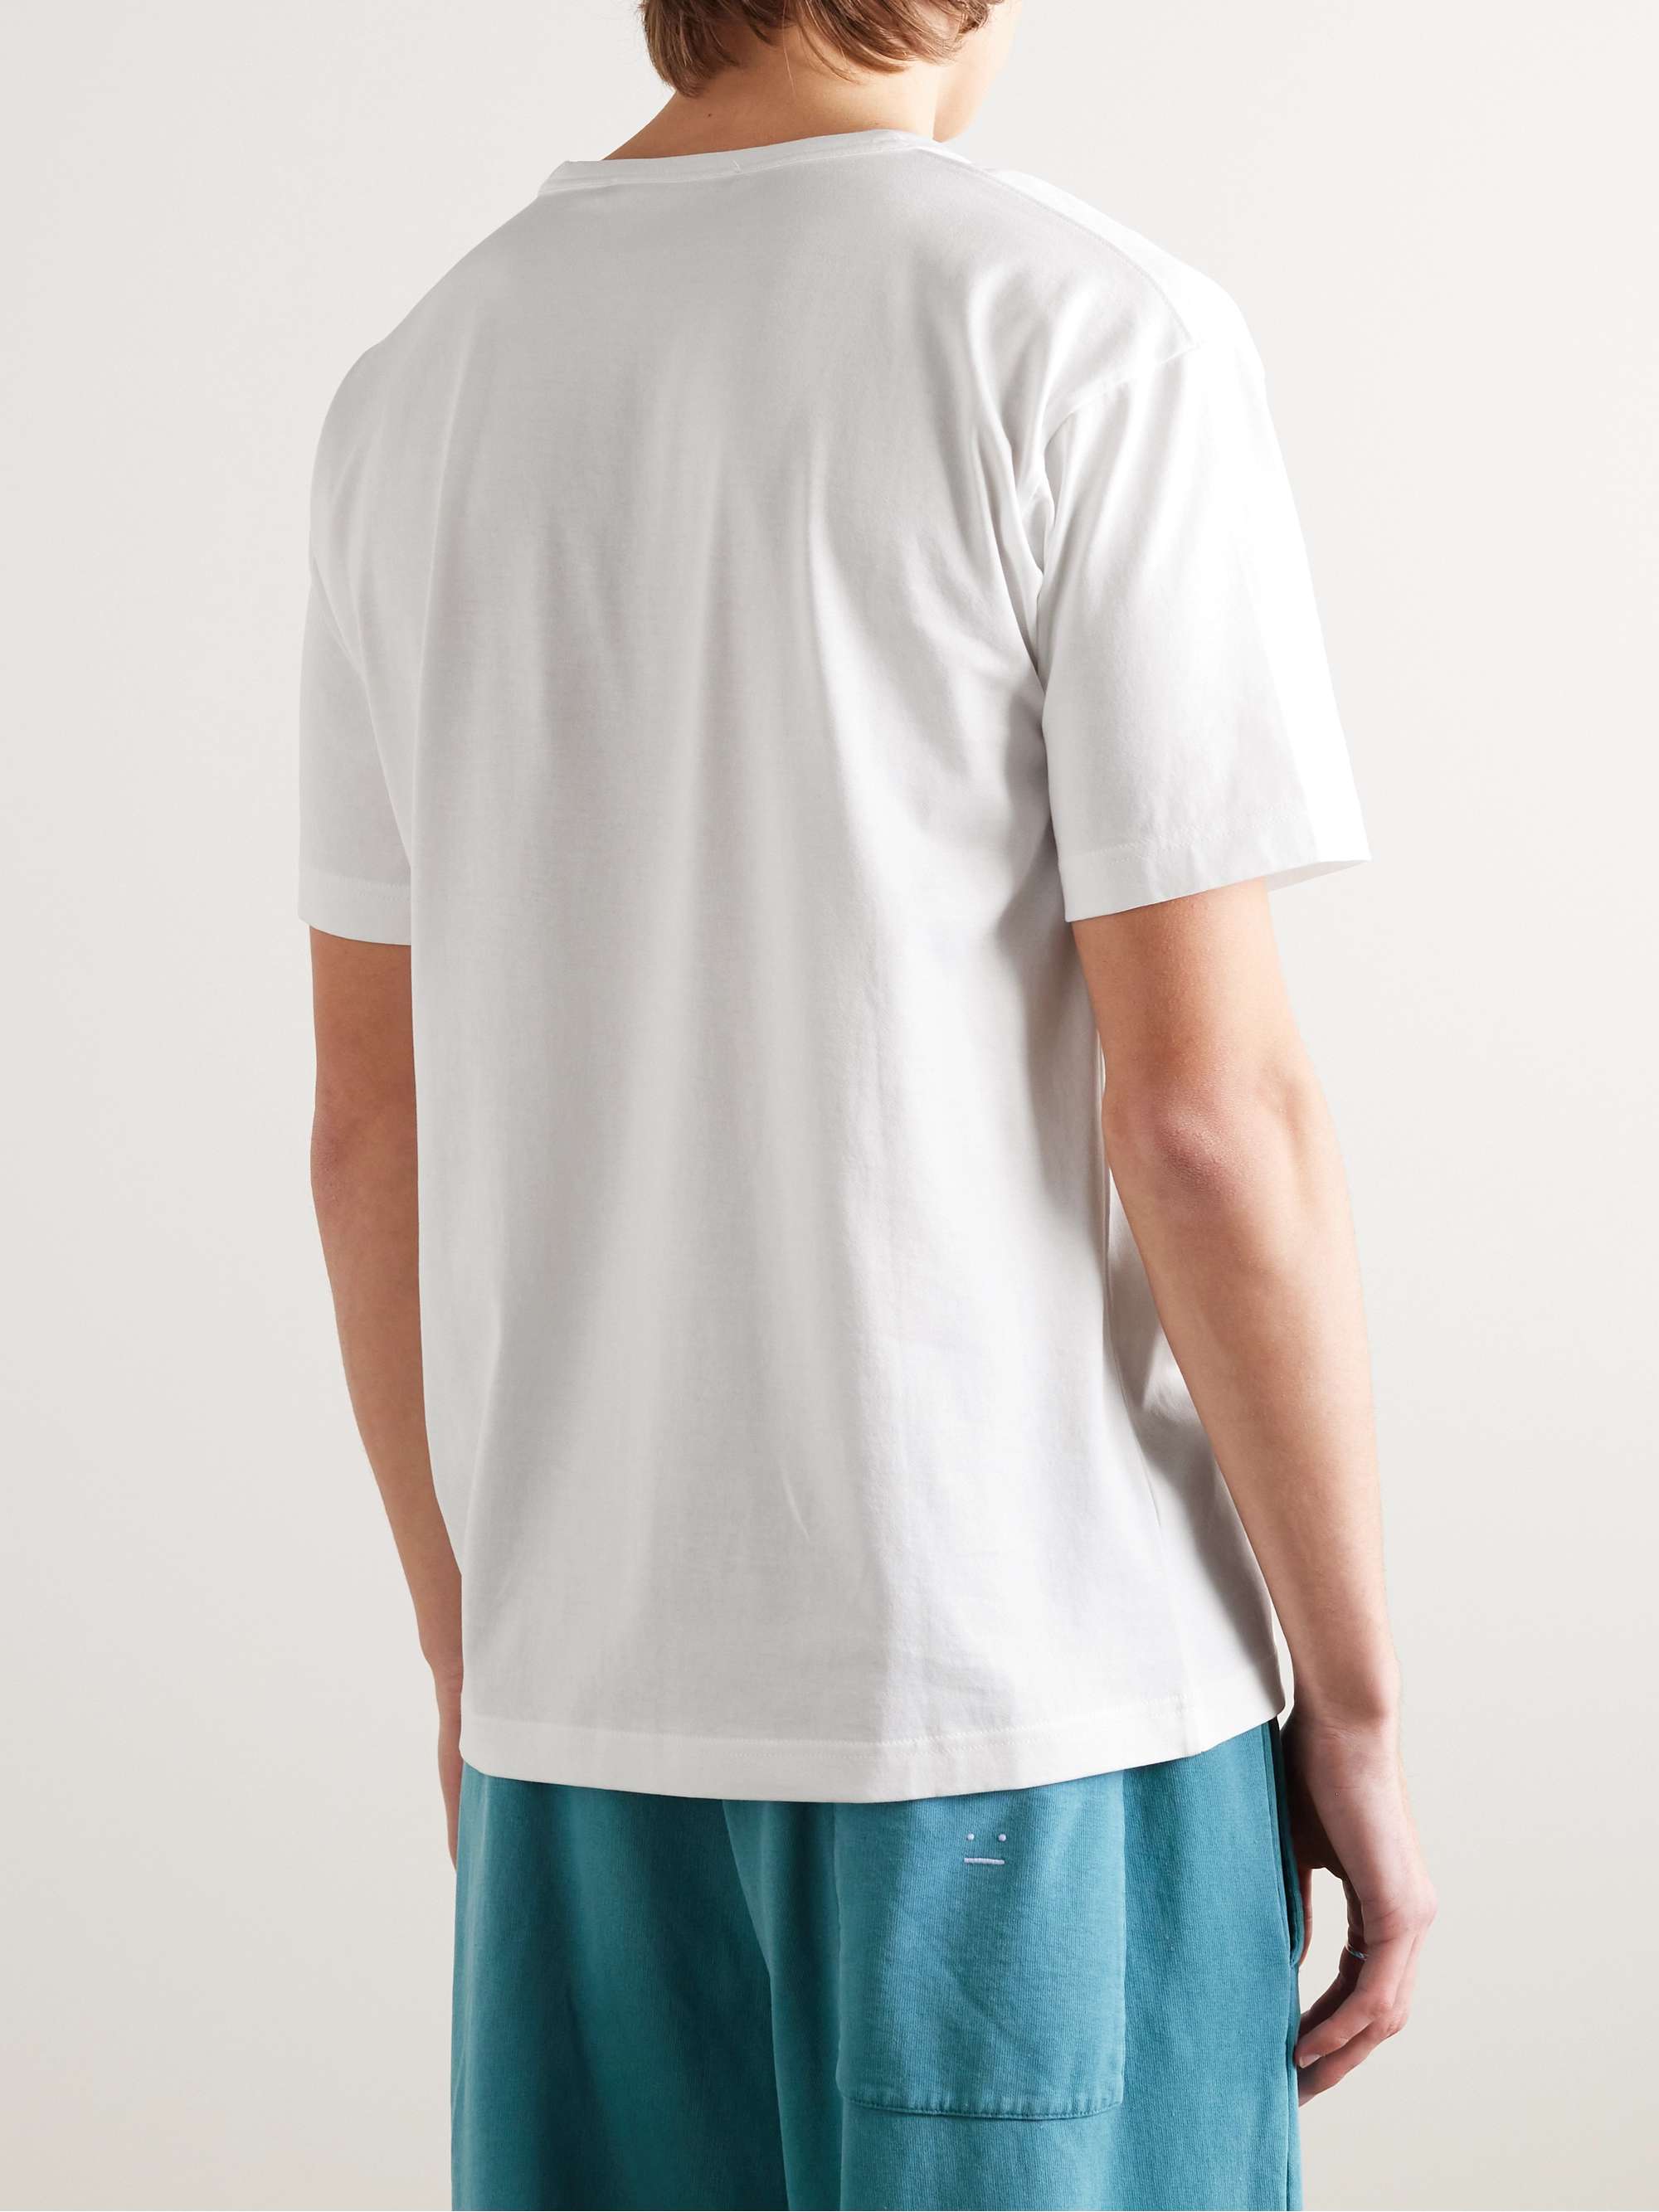 ACNE STUDIOS Nash Logo-Appliquéd Cotton-Jersey T-Shirt for Men | MR PORTER